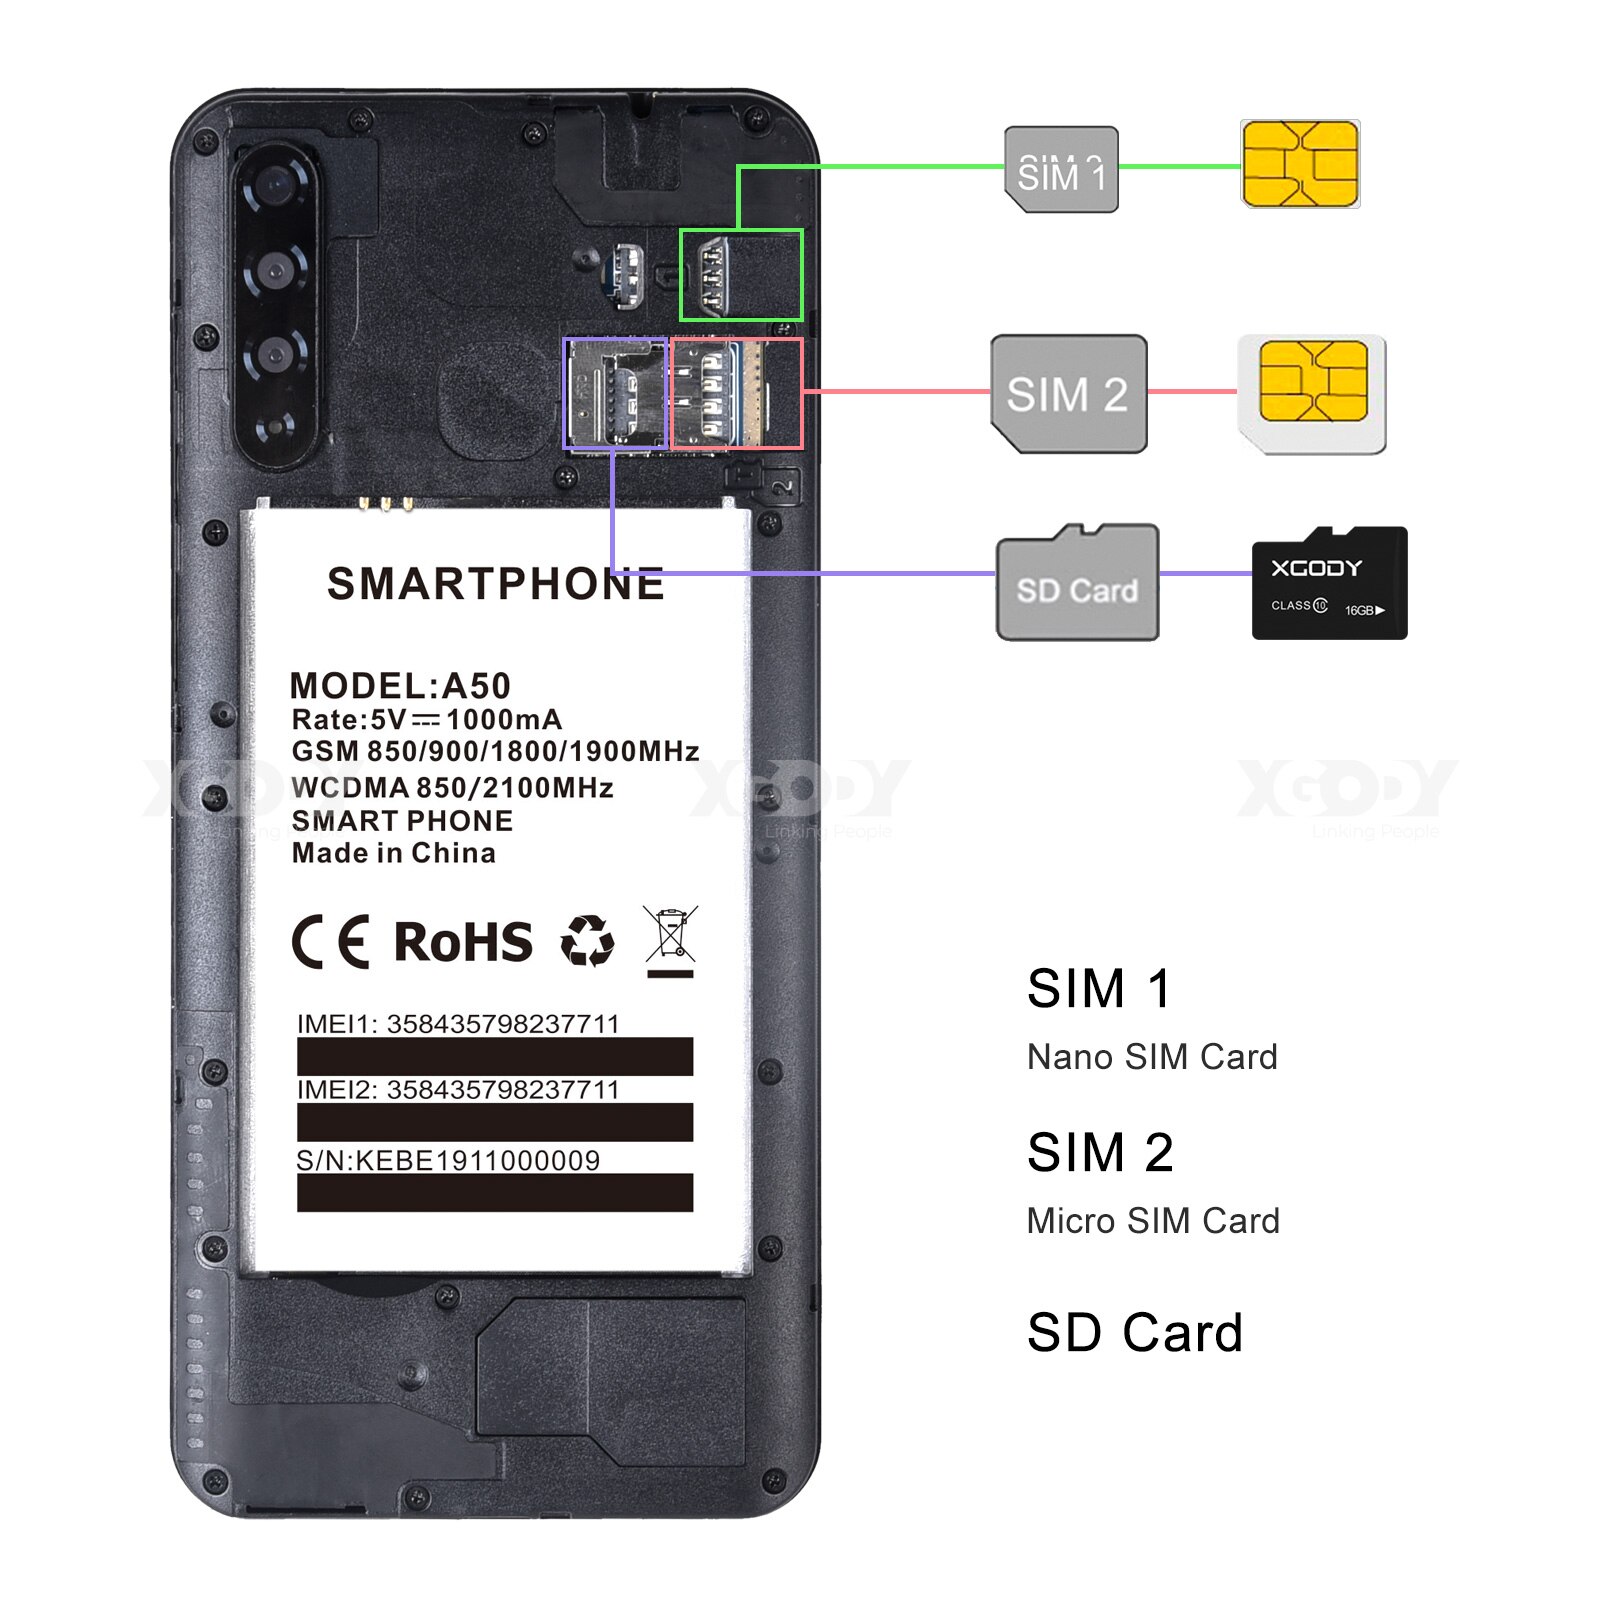 XGODY-A50-3G-Smartphone-Android-9-0-6-5-pouces-19-9-plein-cran-1GB-4GB